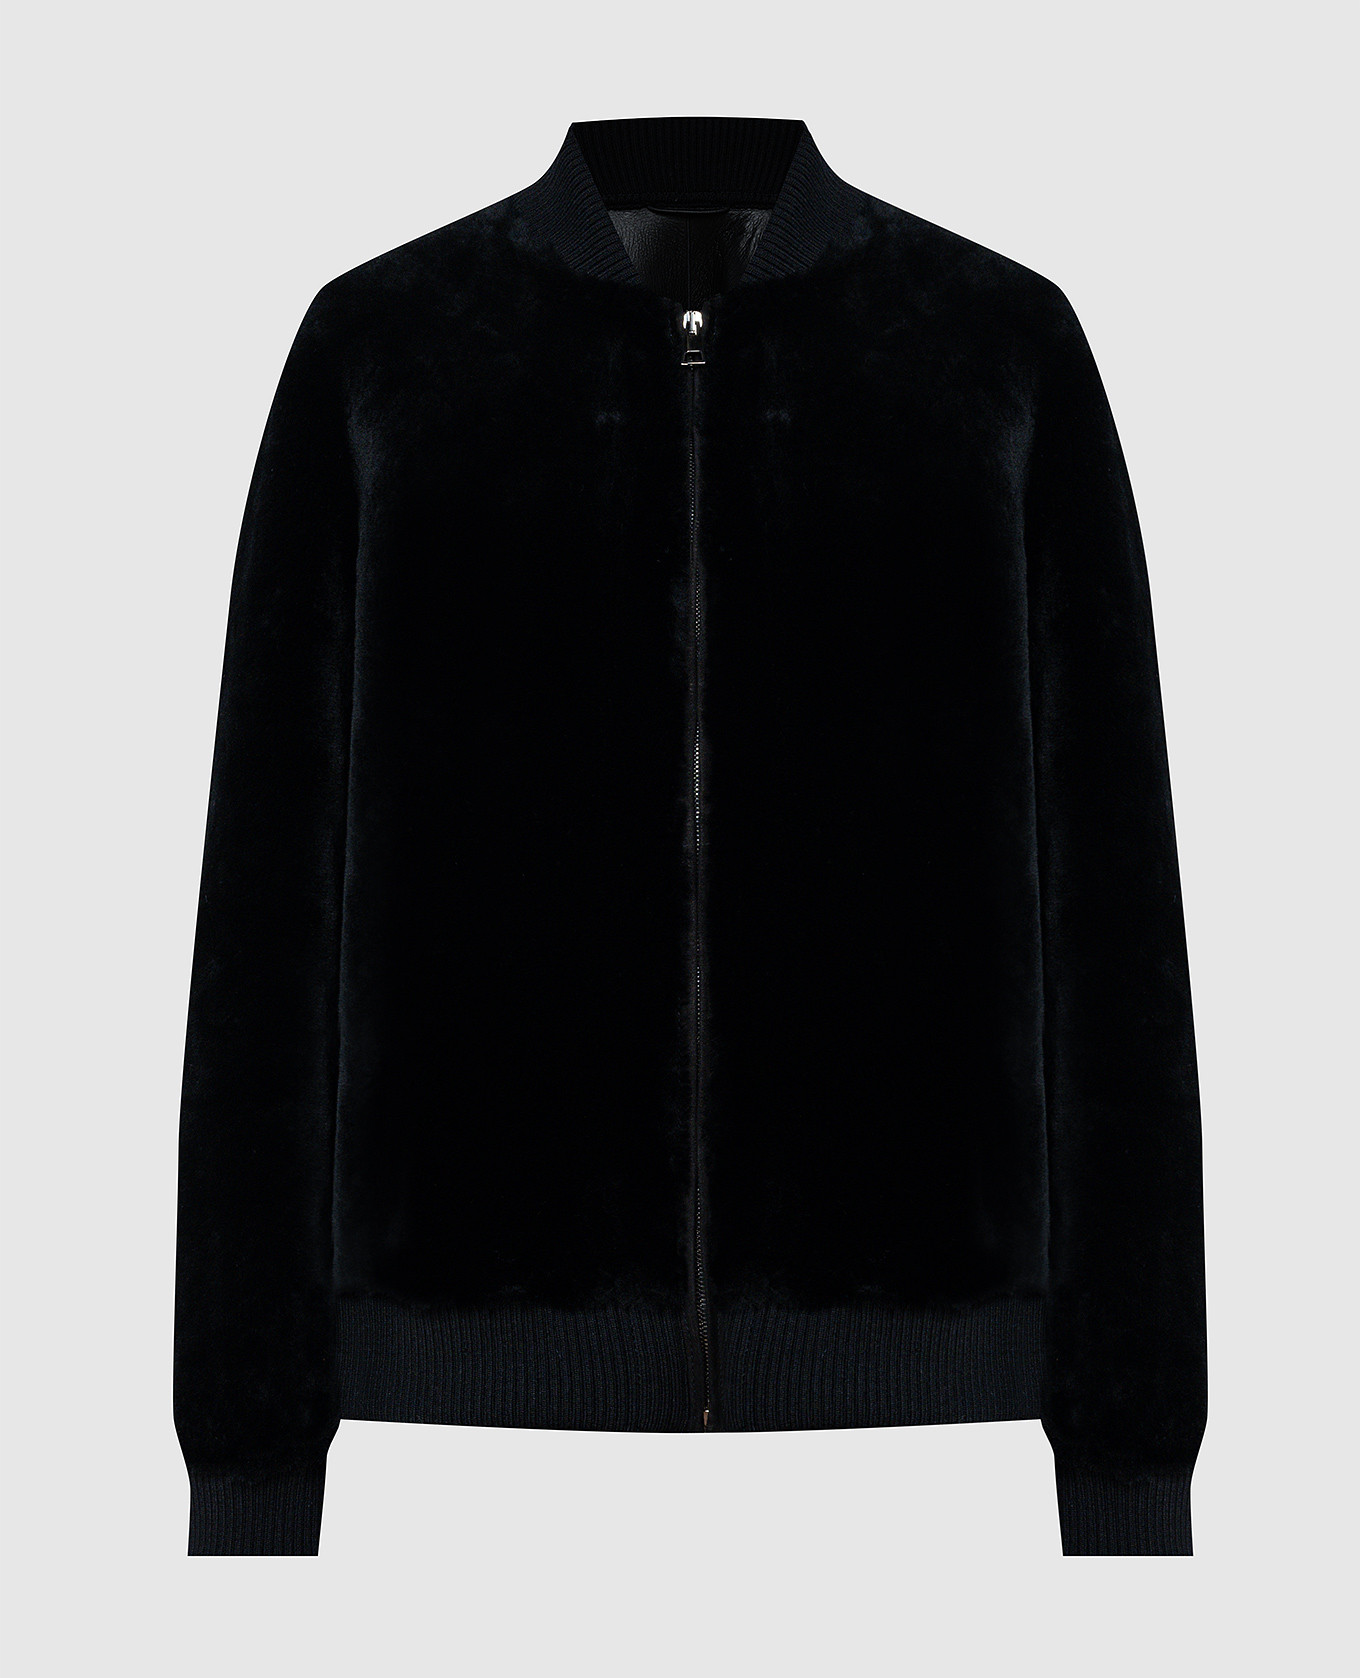 Irvin black shearling coat